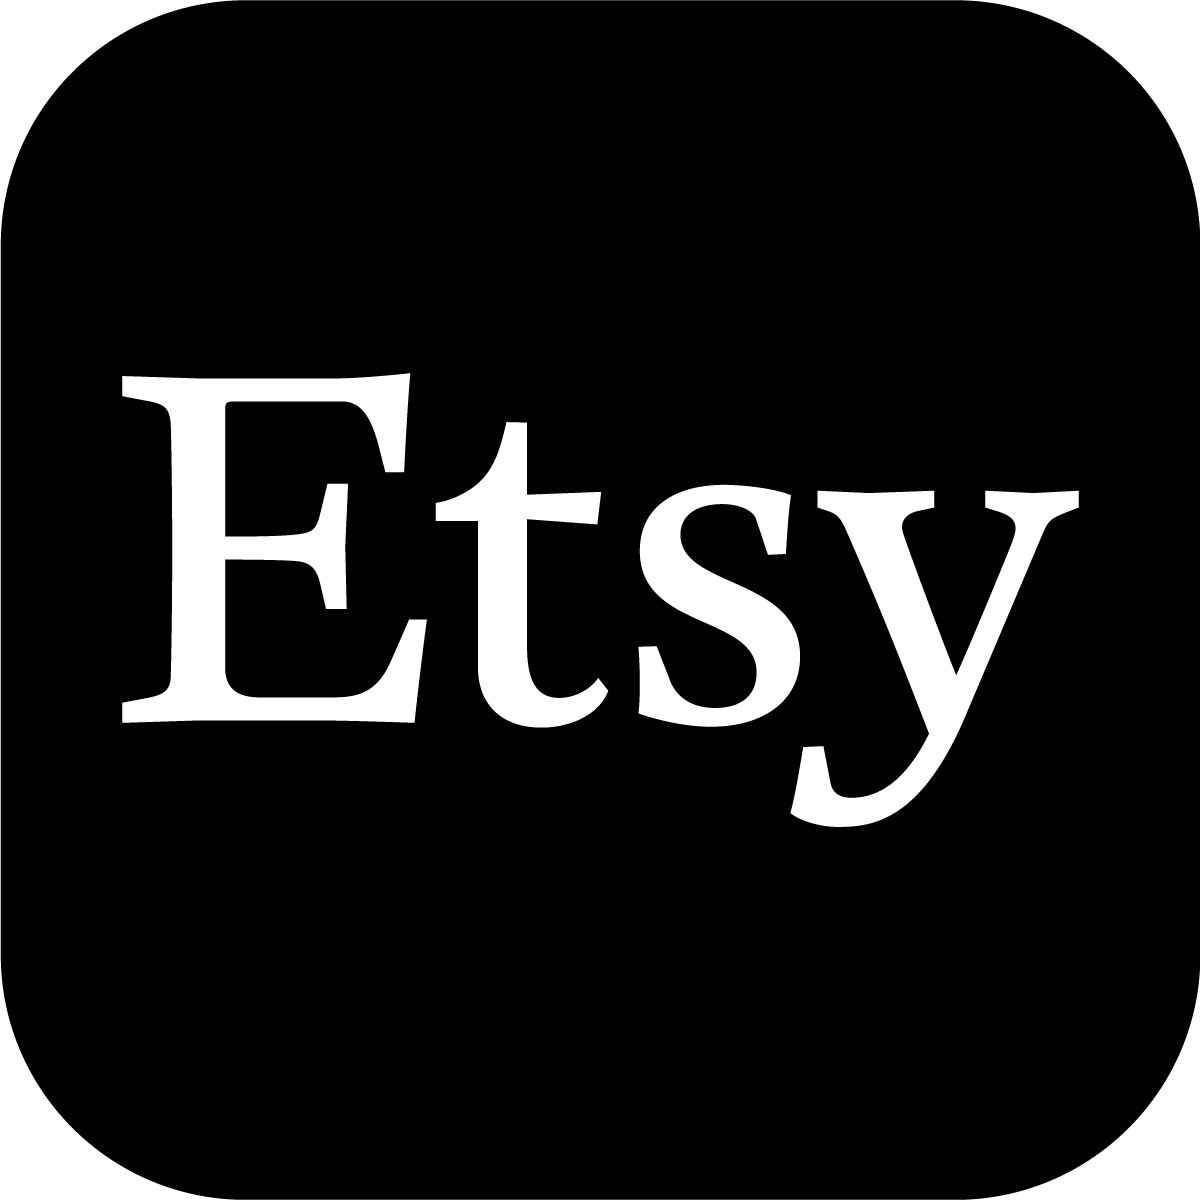 Etsy Logo Black and White